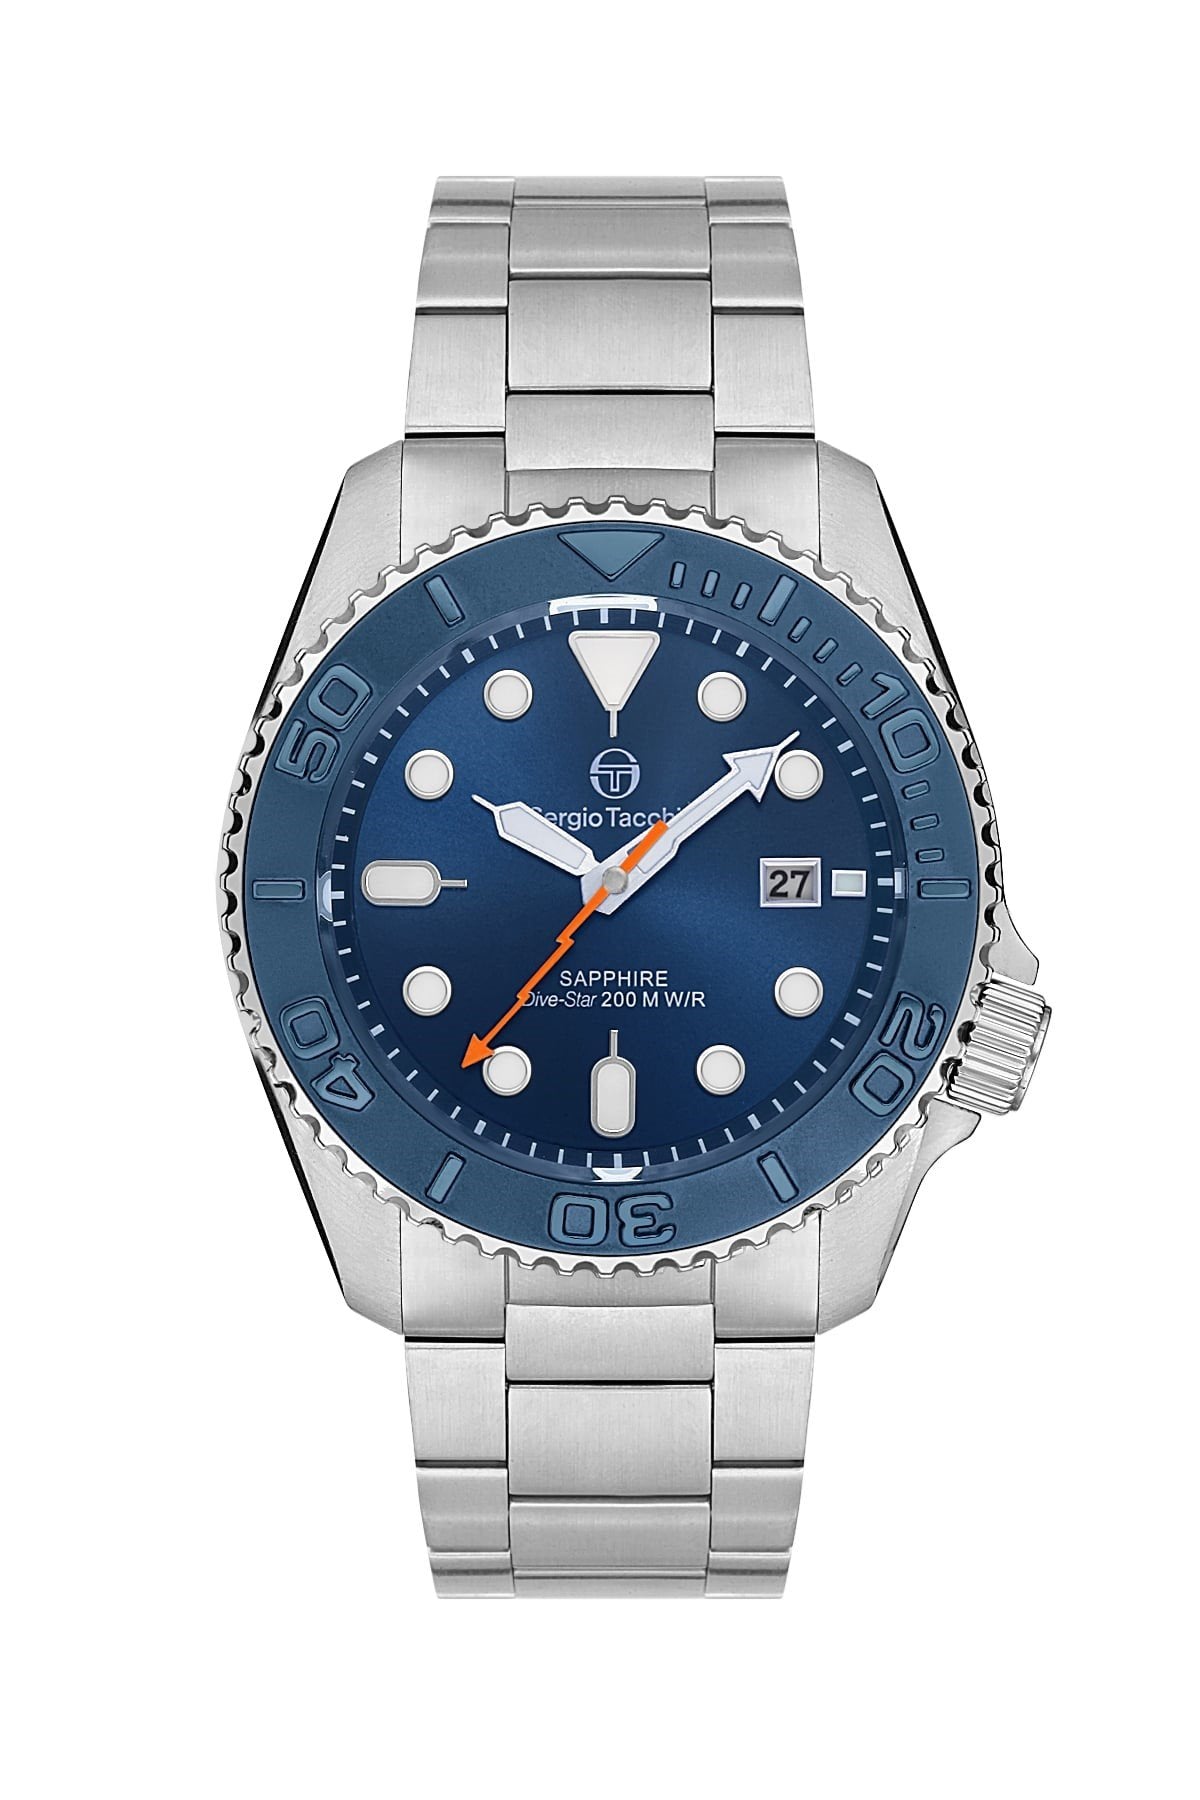 | Sergio Tacchini Men's Watch ST.3.10001-2 - Takreem Craft | - #sho| Sergio Tacchini Men's Watch ST.3.10001-2 - Takreem Craft |p_name#| Sergio Tacchini Men's Watch ST.3.10001-2 - Takreem Craft |WatchSergio TacchiniTakreem.joST.3.10001-28682308231403SilverStainless SteelMen| Sergio Tacchini Men's Watch ST.3.10001-2 - Takreem Craft |